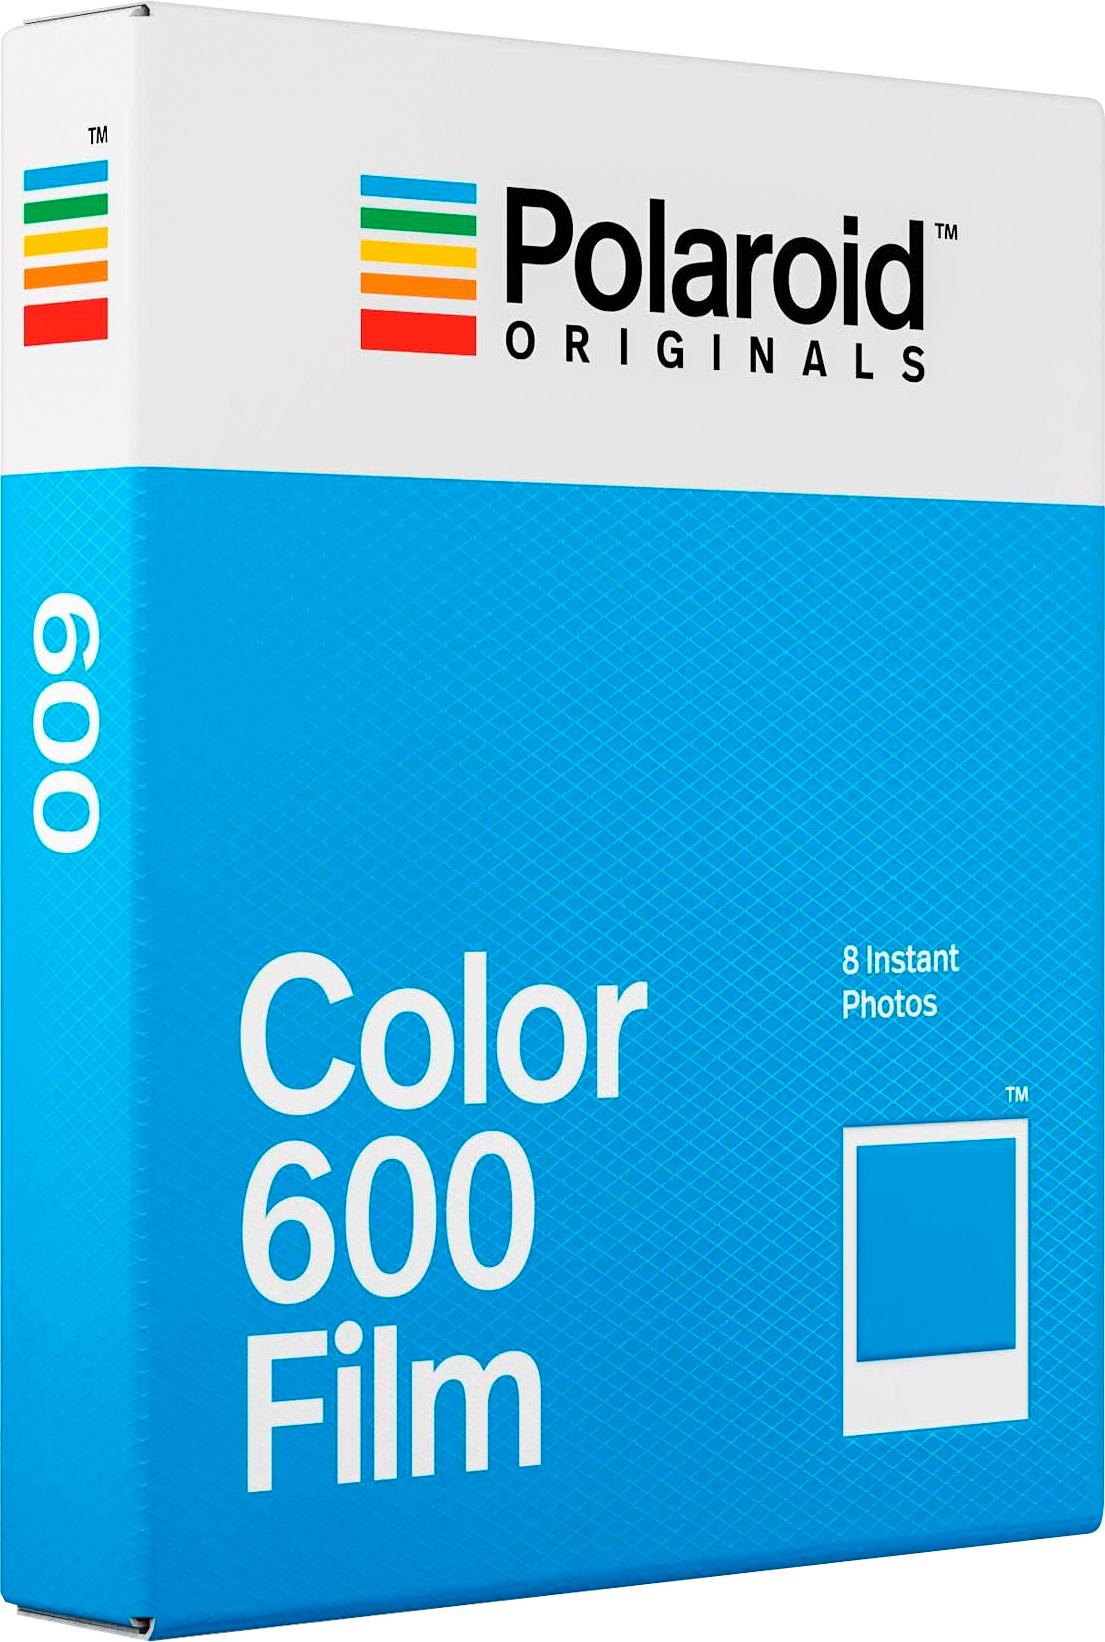 Polaroid Originals 4670 Color Film for 600 Cameras by Polaroid Originals